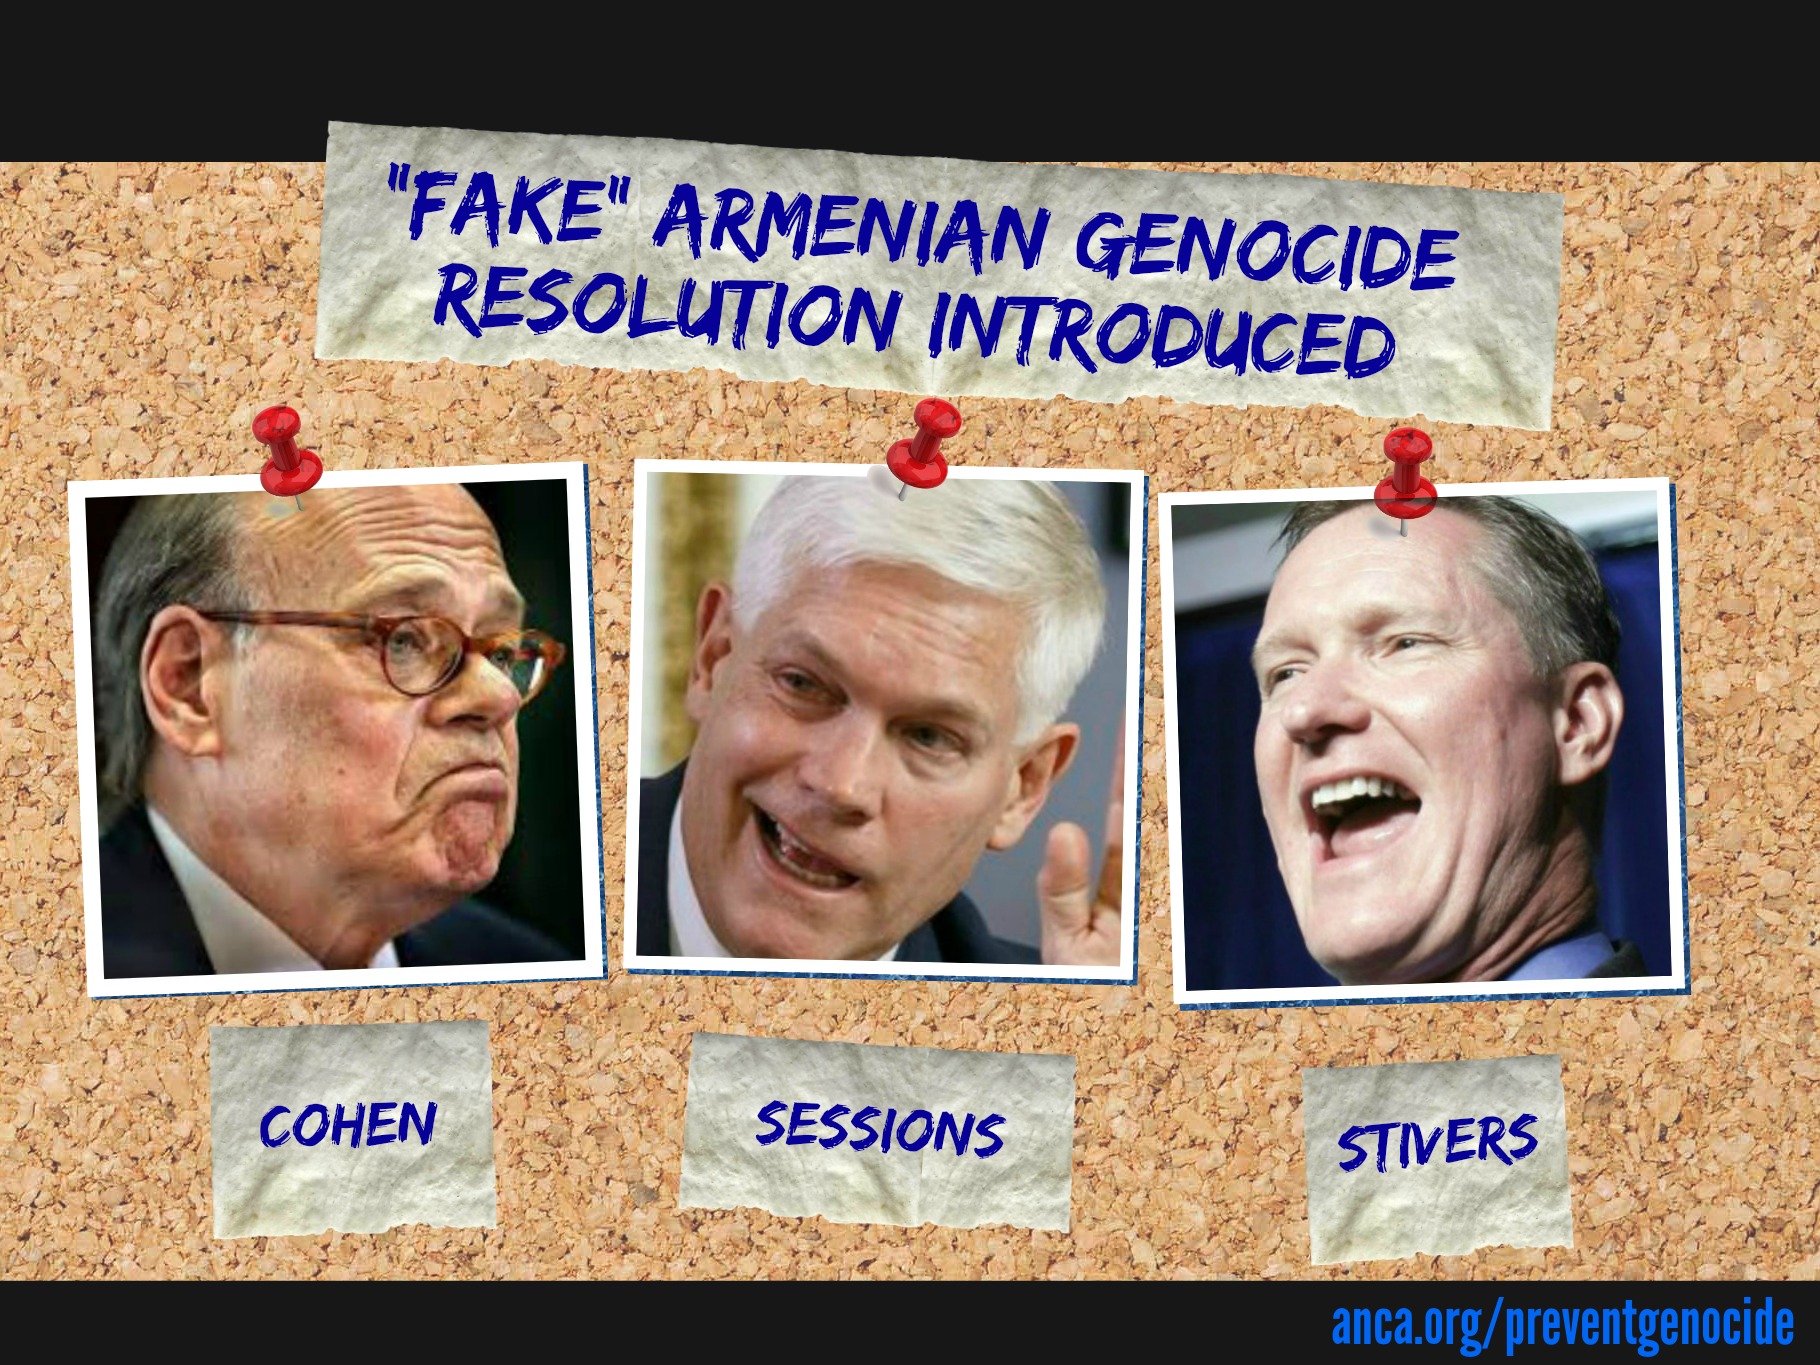 Genocide deniers introduce “fake” Armenian Genocide resolution